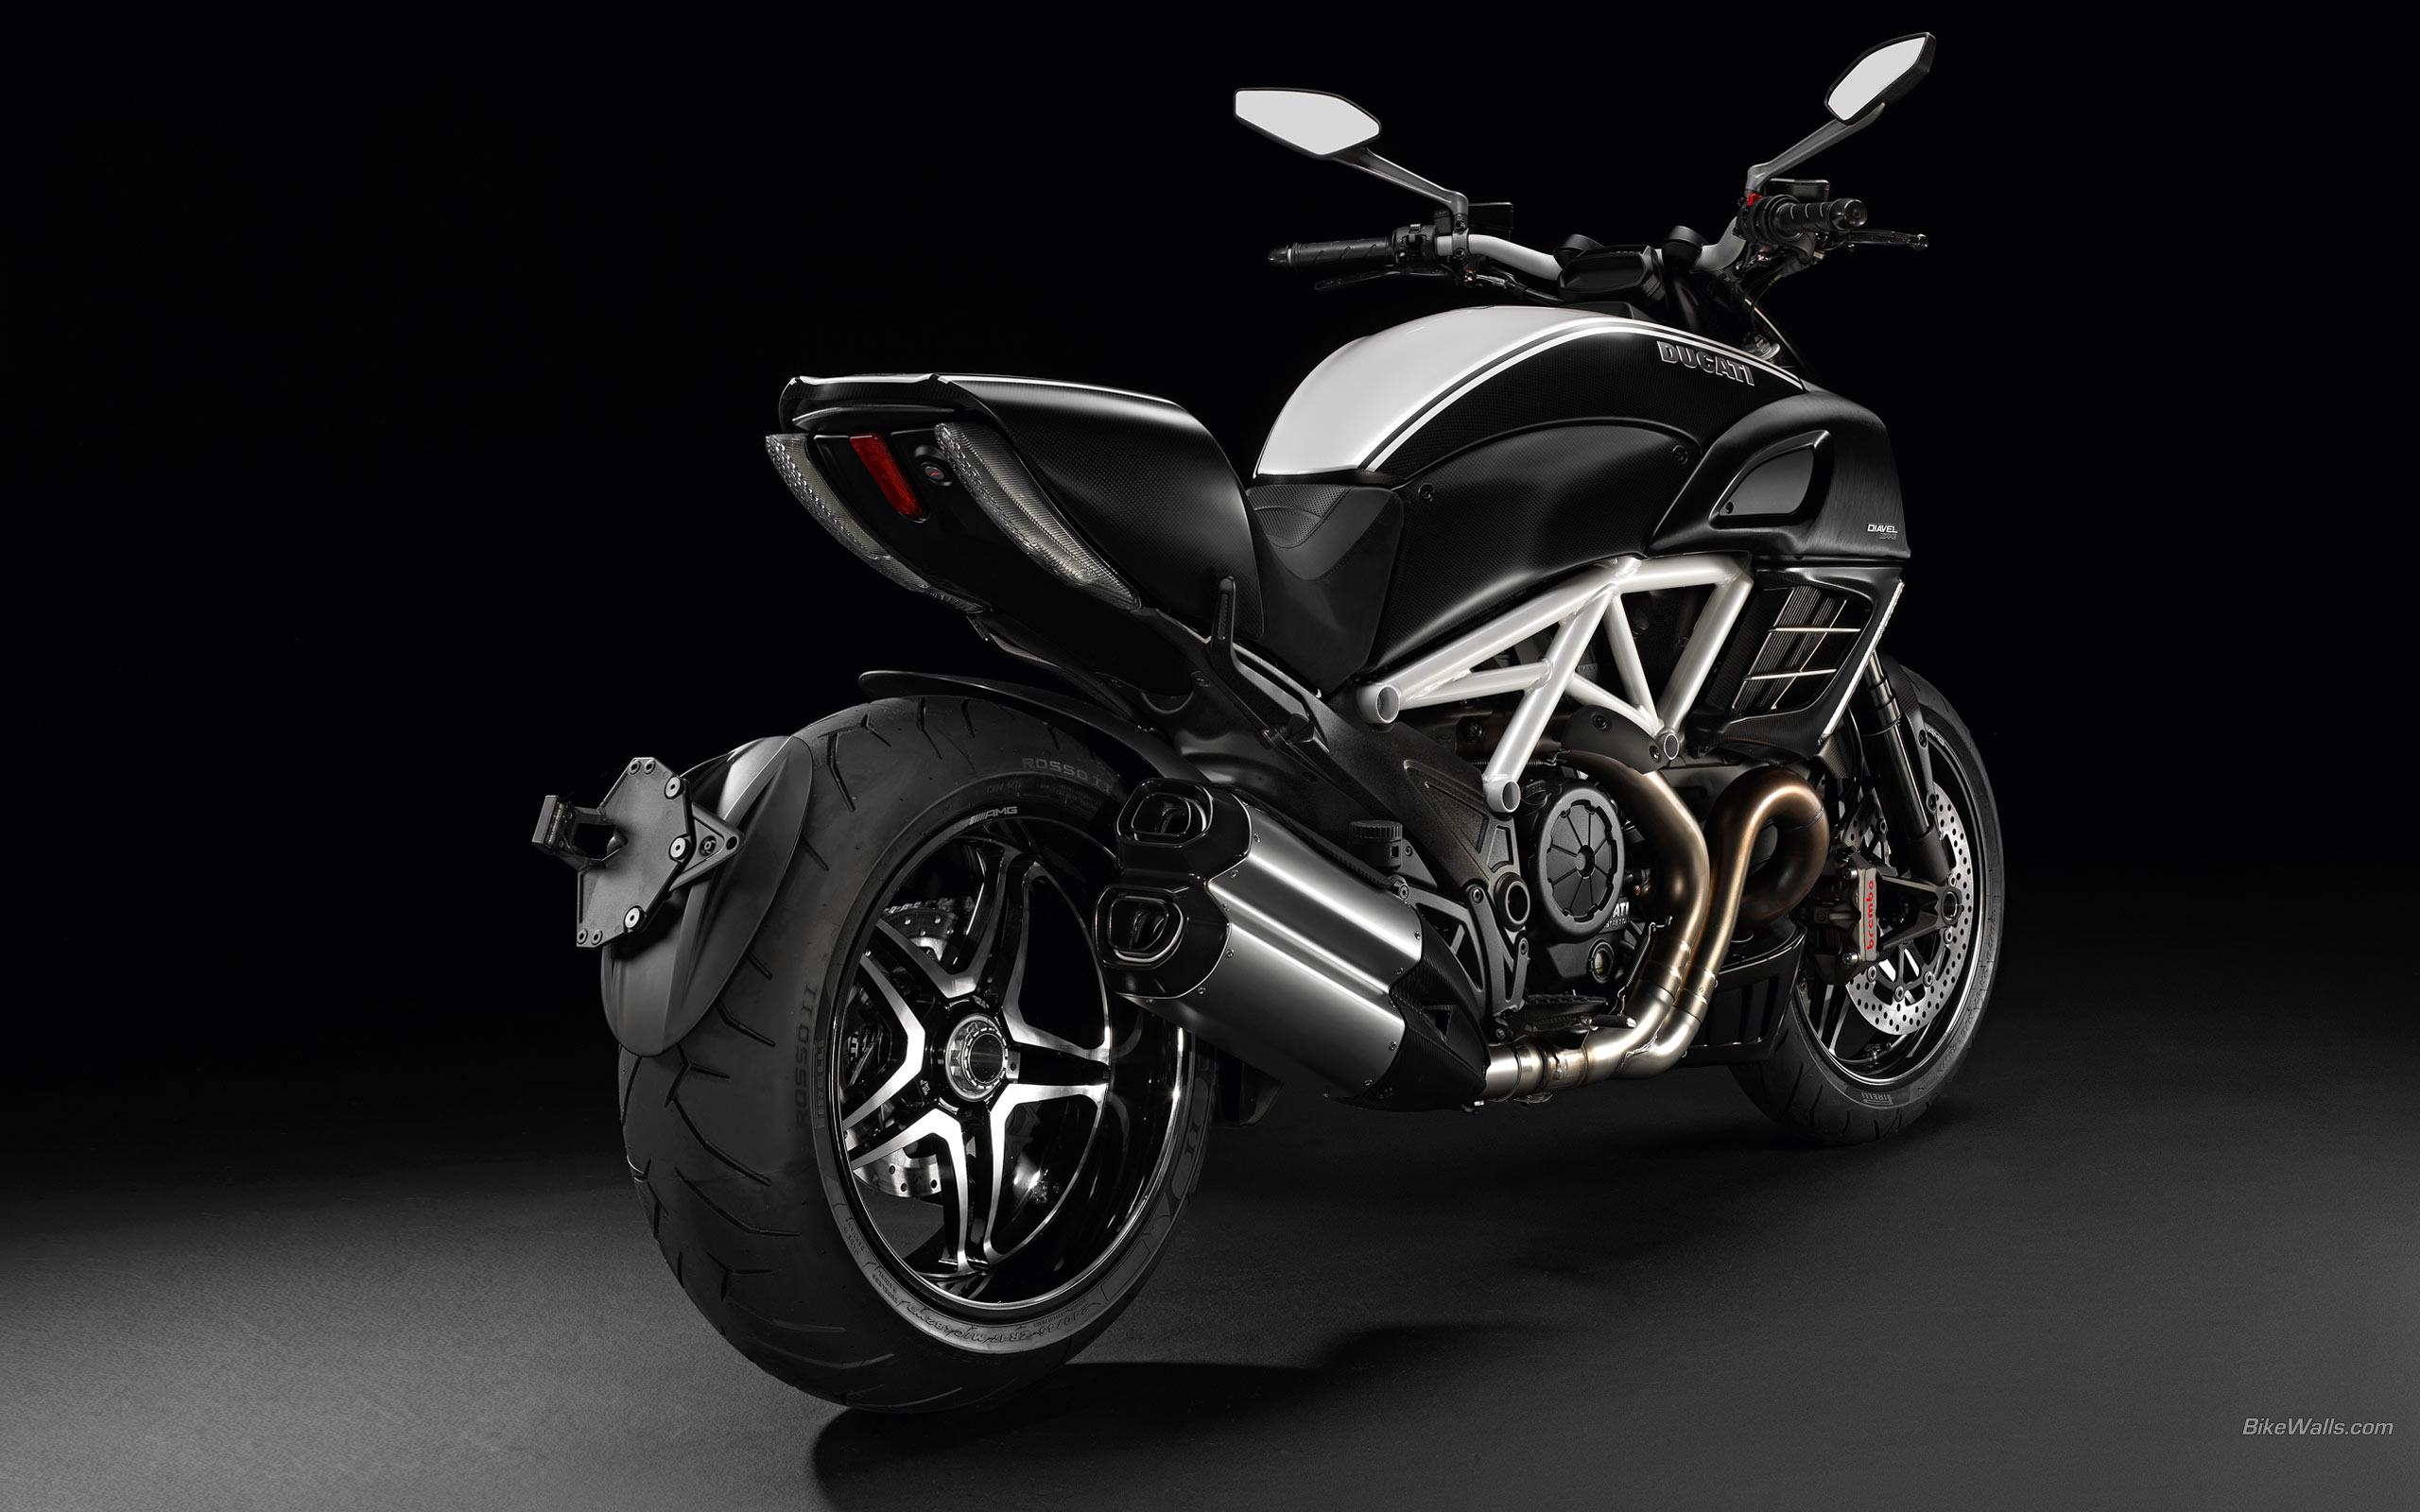 Motorcycles images Ducati Diavel wallpaper photos 31816567 2560x1600